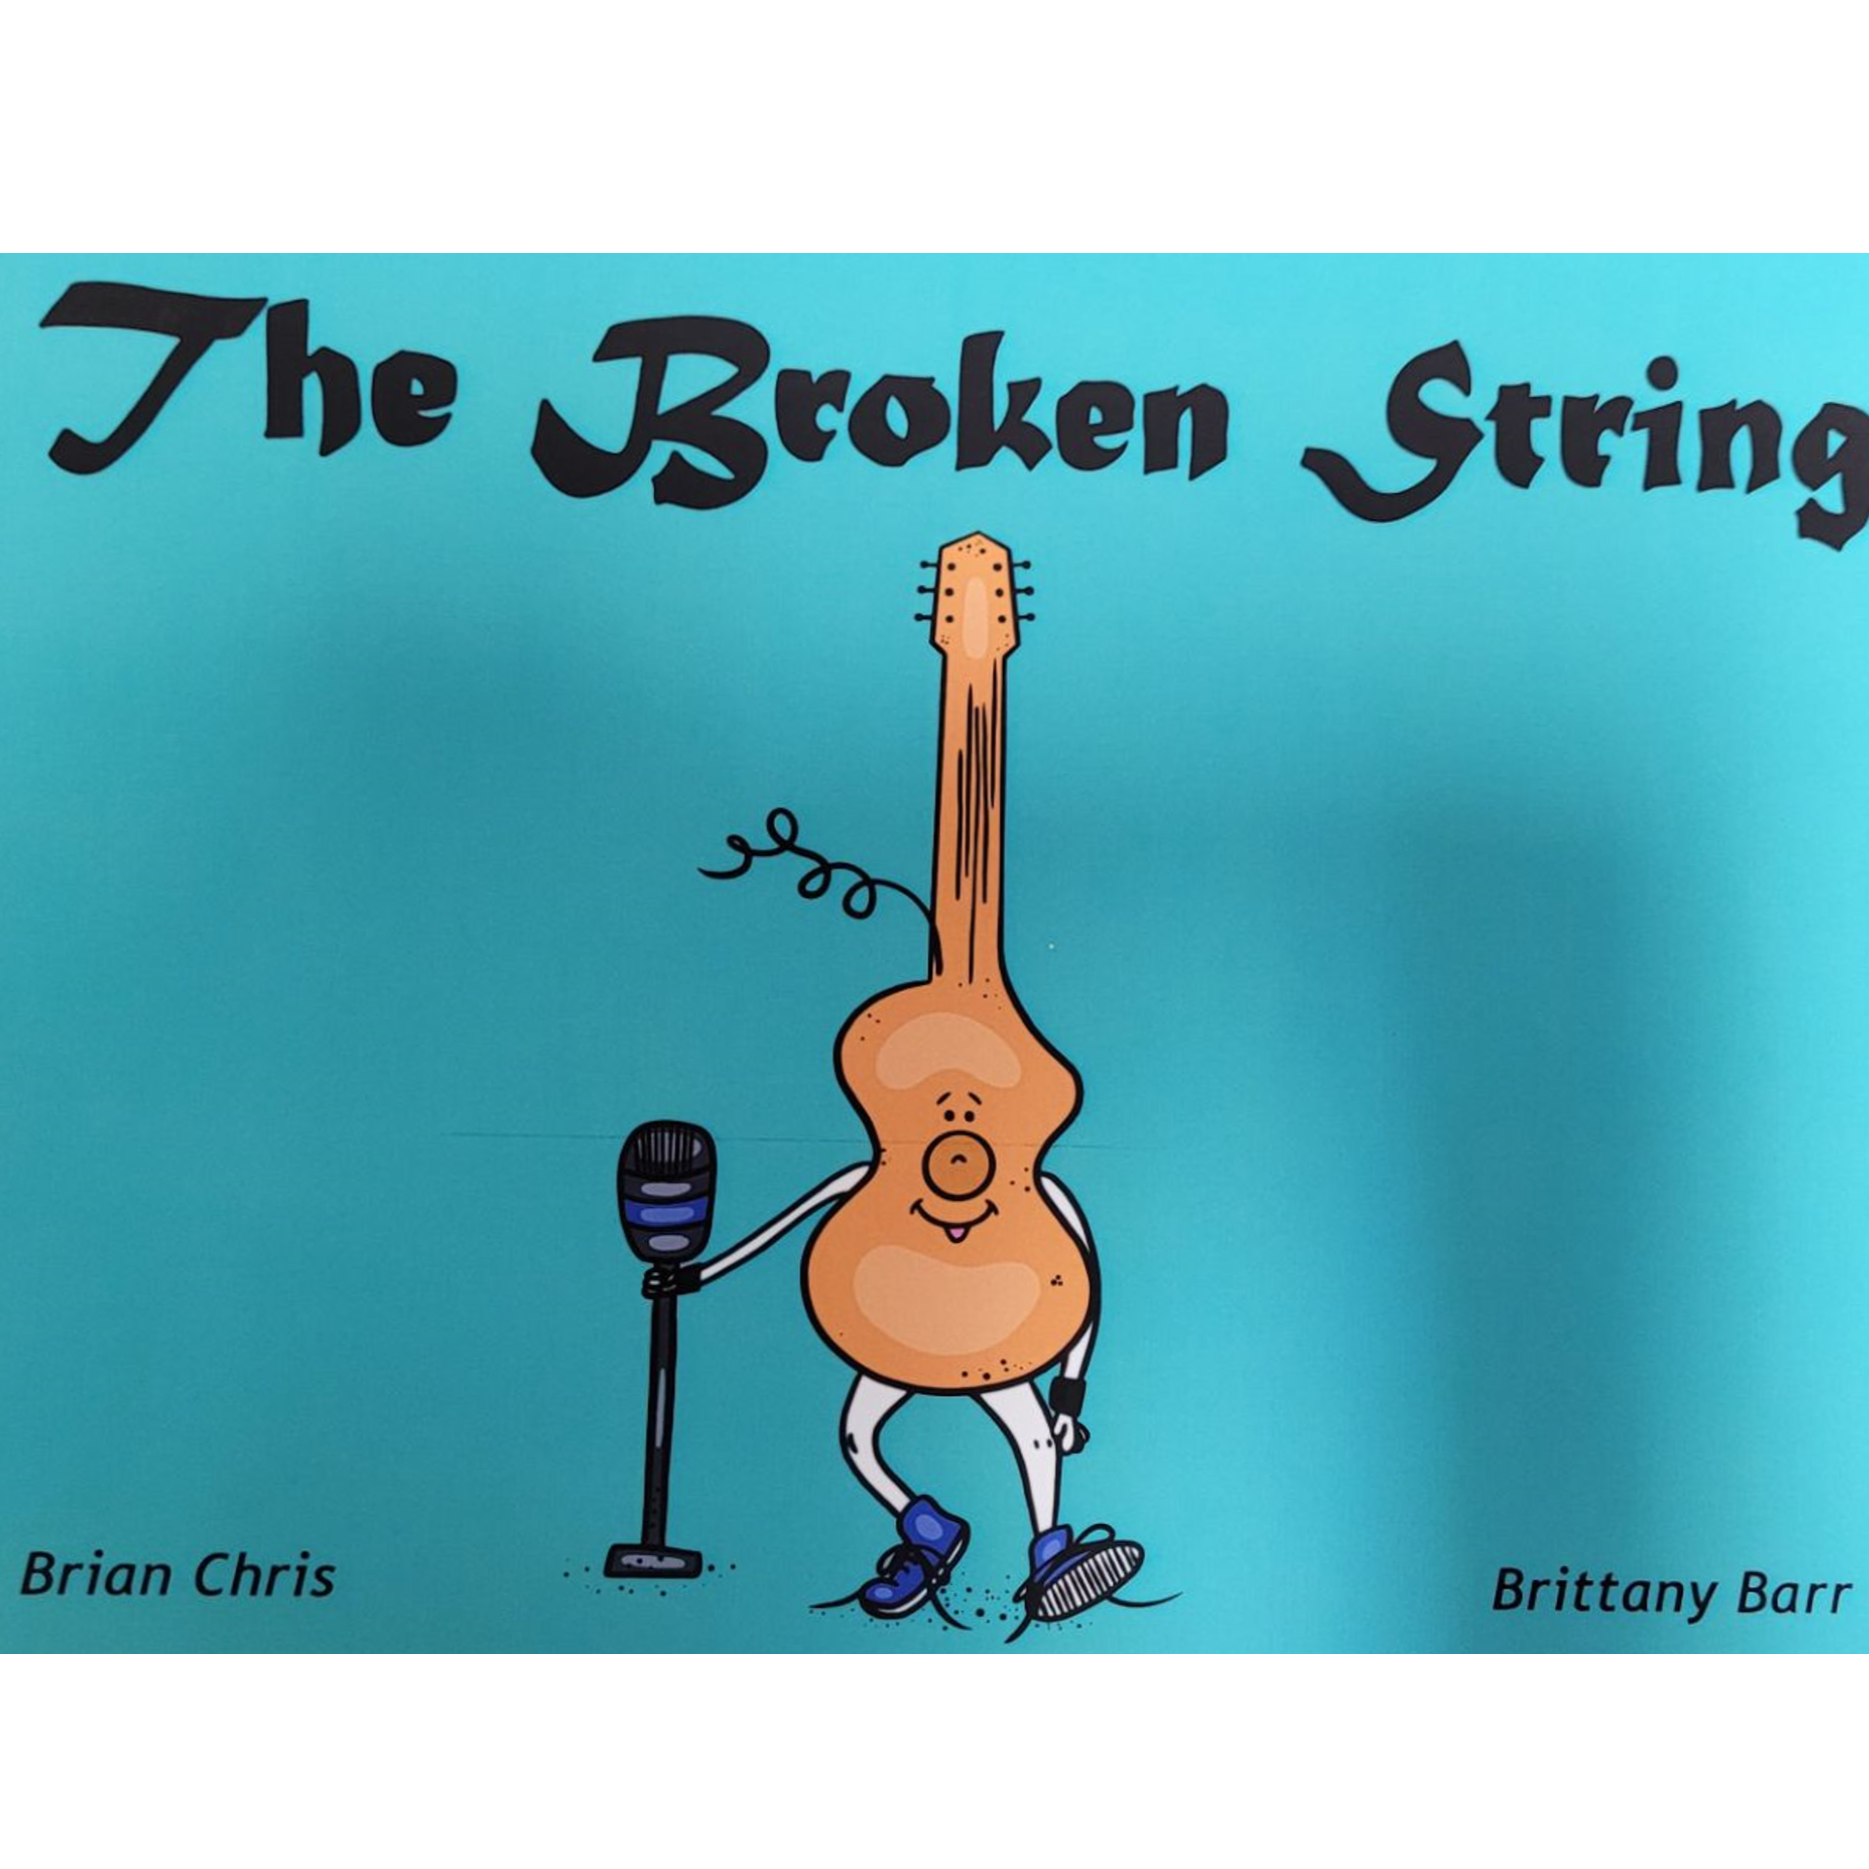 Chris, Brian; The Broken String, paperback